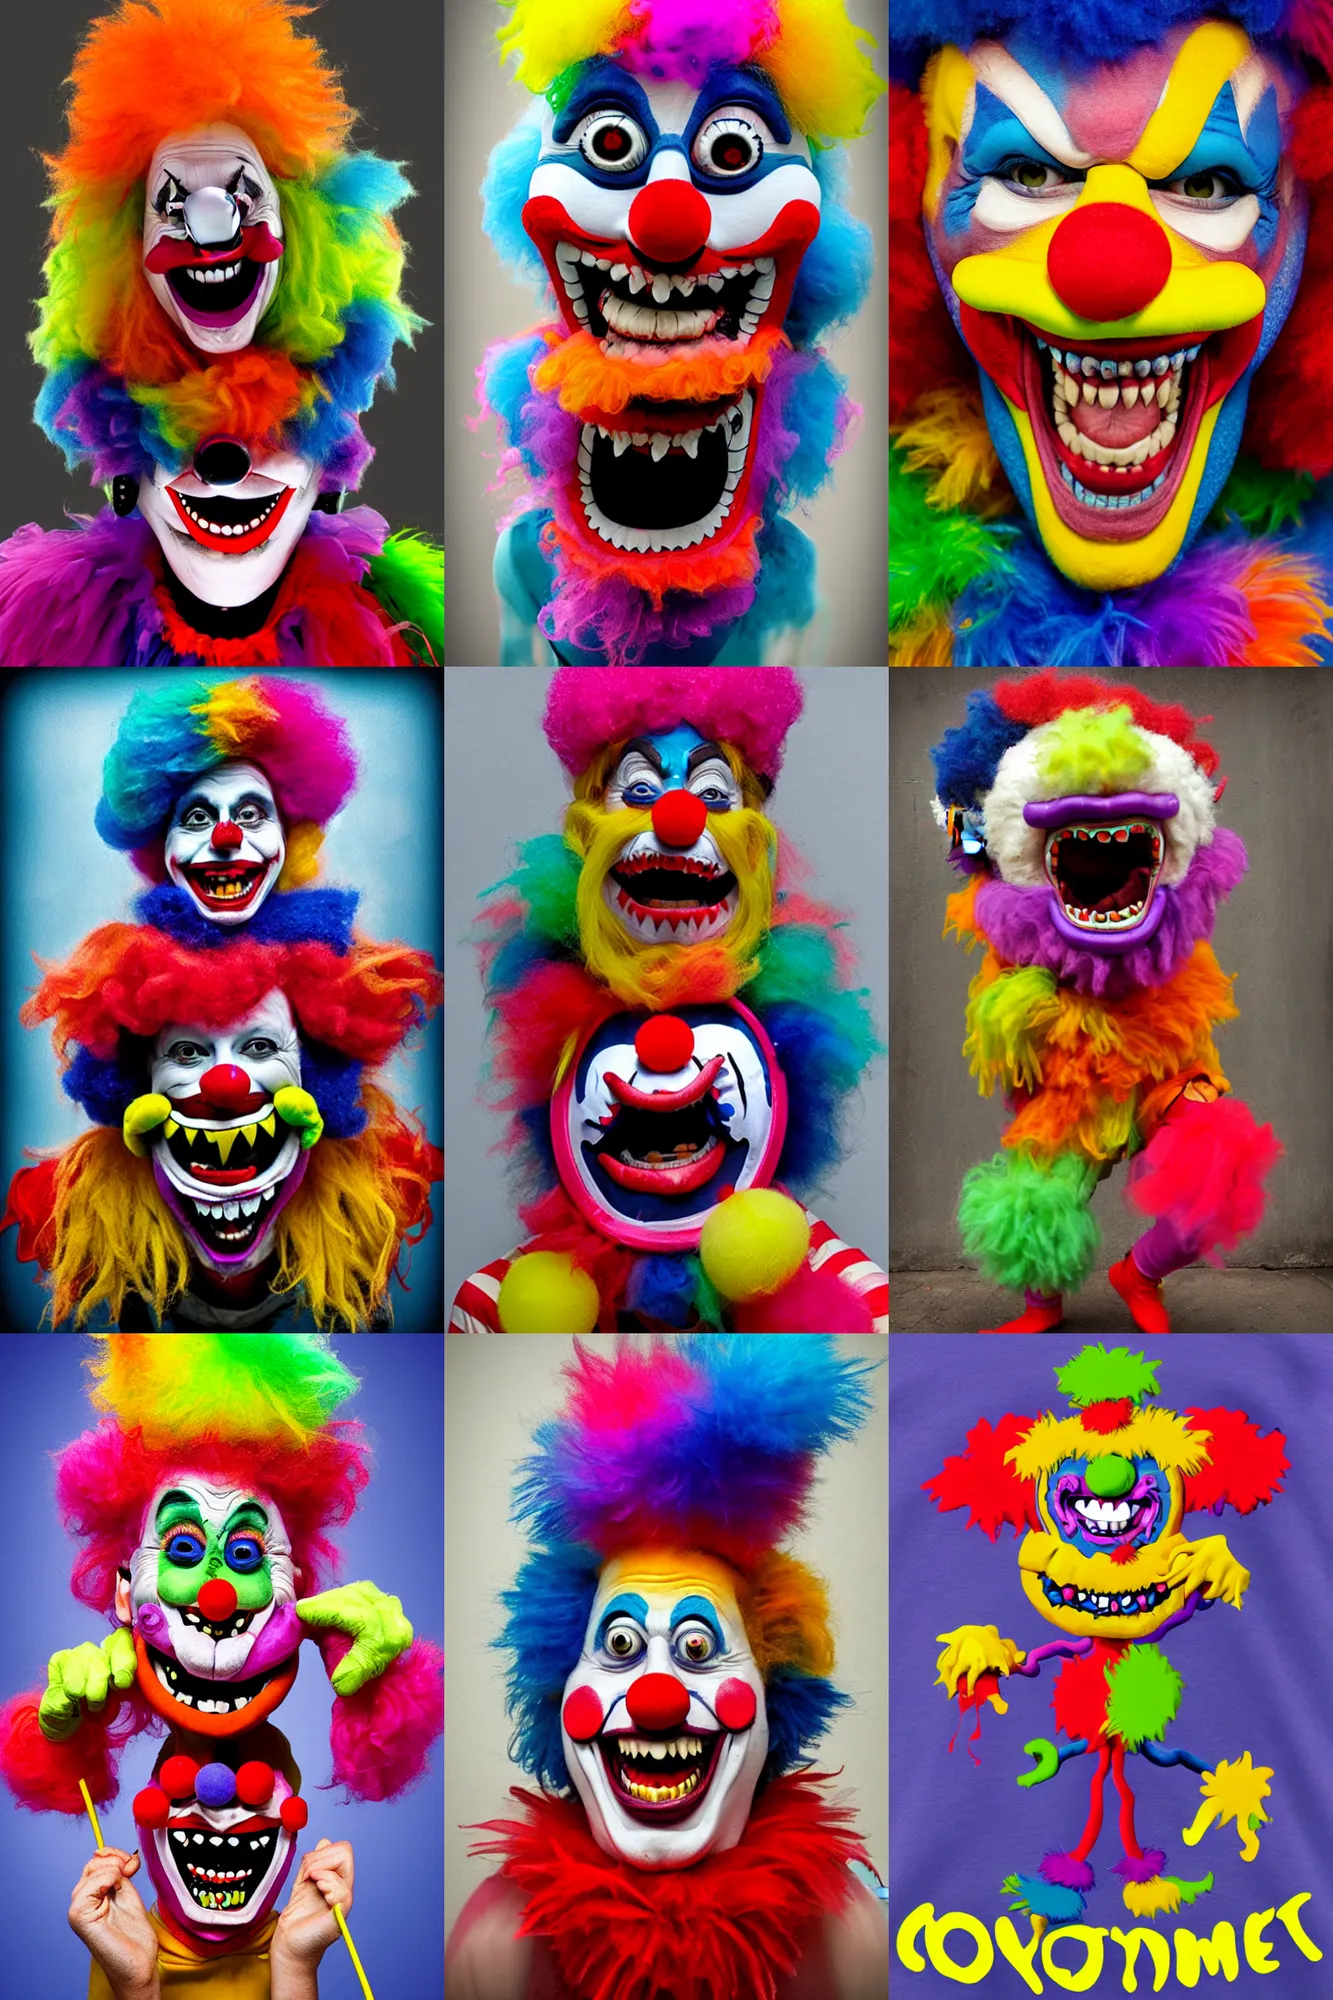 Prompt: crazy monster clown